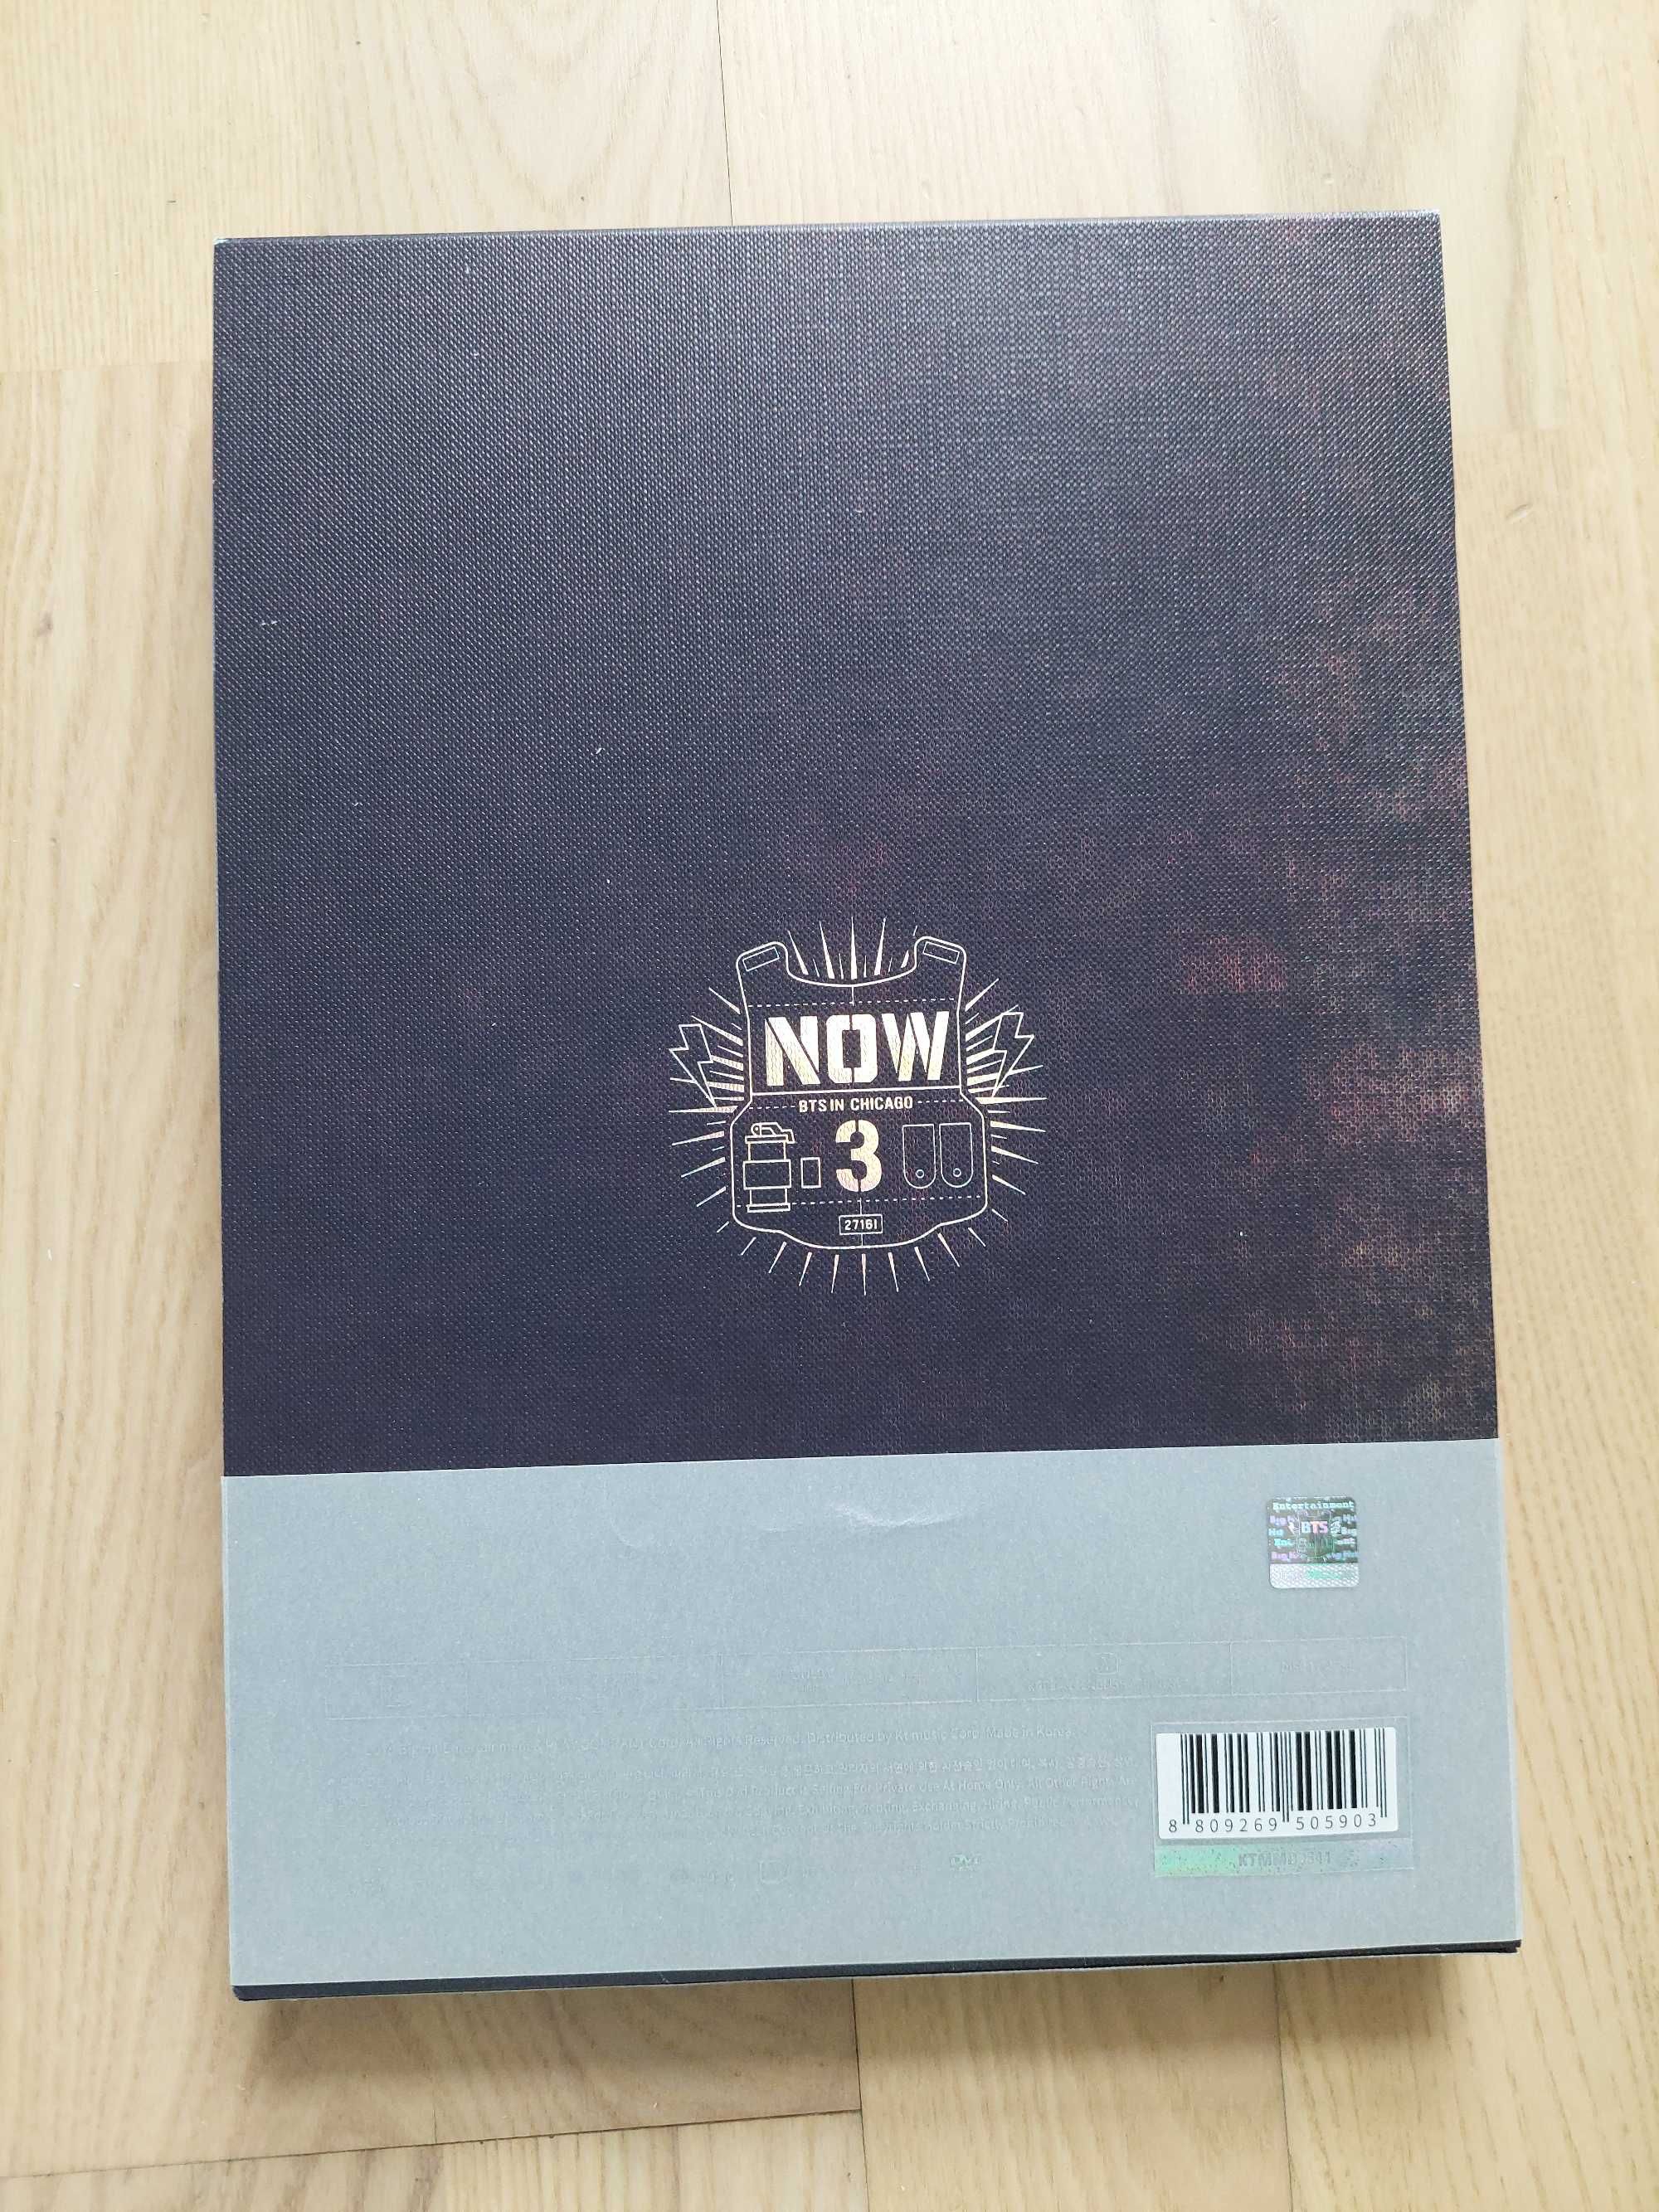 BTS - Now3 Dreaming Days In Chicago [2016] Photobook + DVD kpop 방탄소년단